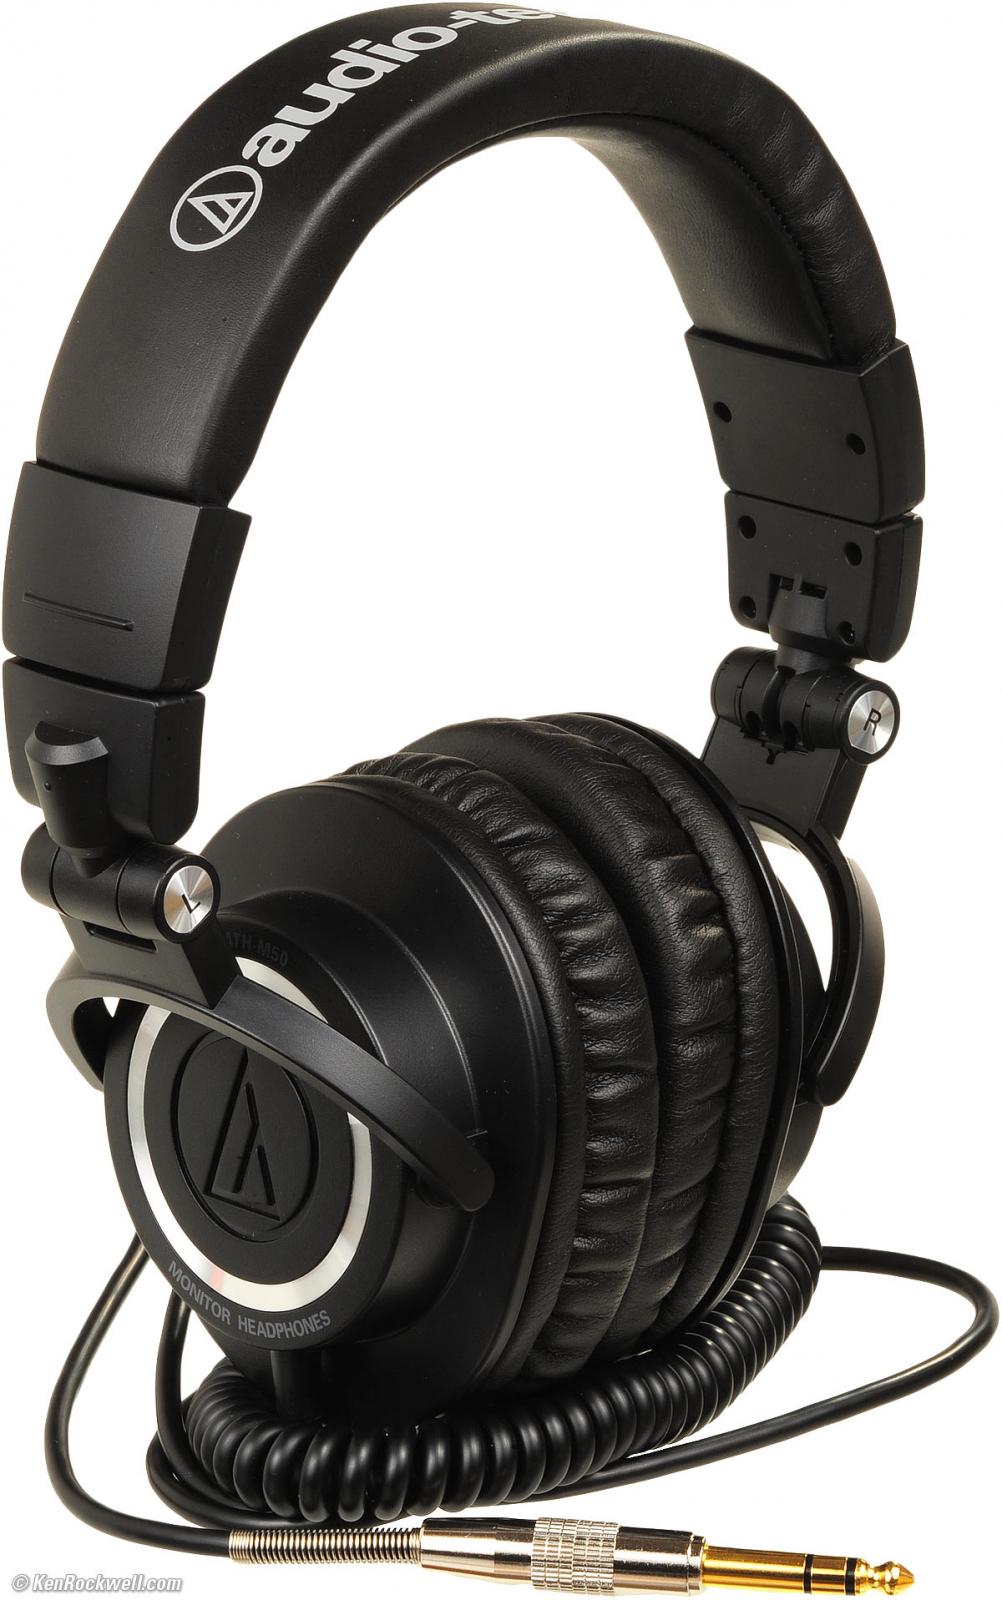 Hardware Review - Audio-Technica ATH-M50 Circumaural Studio Monitor  Headphones | Home Theater Forum